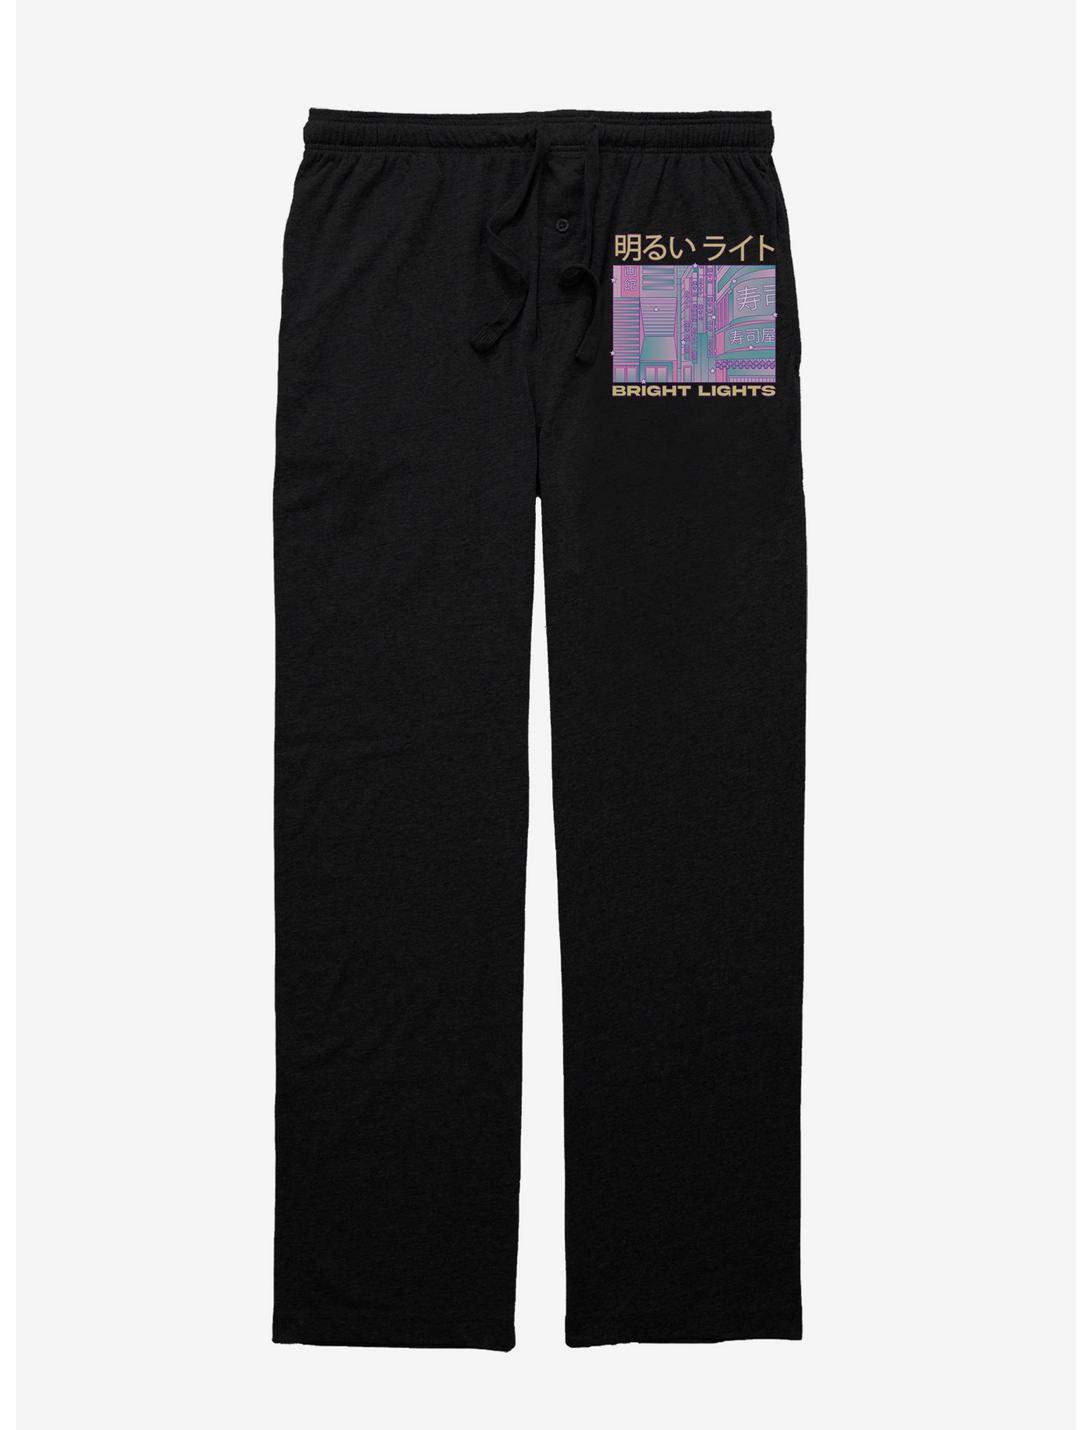 Bright Lights Pajama Pants, BLACK, hi-res